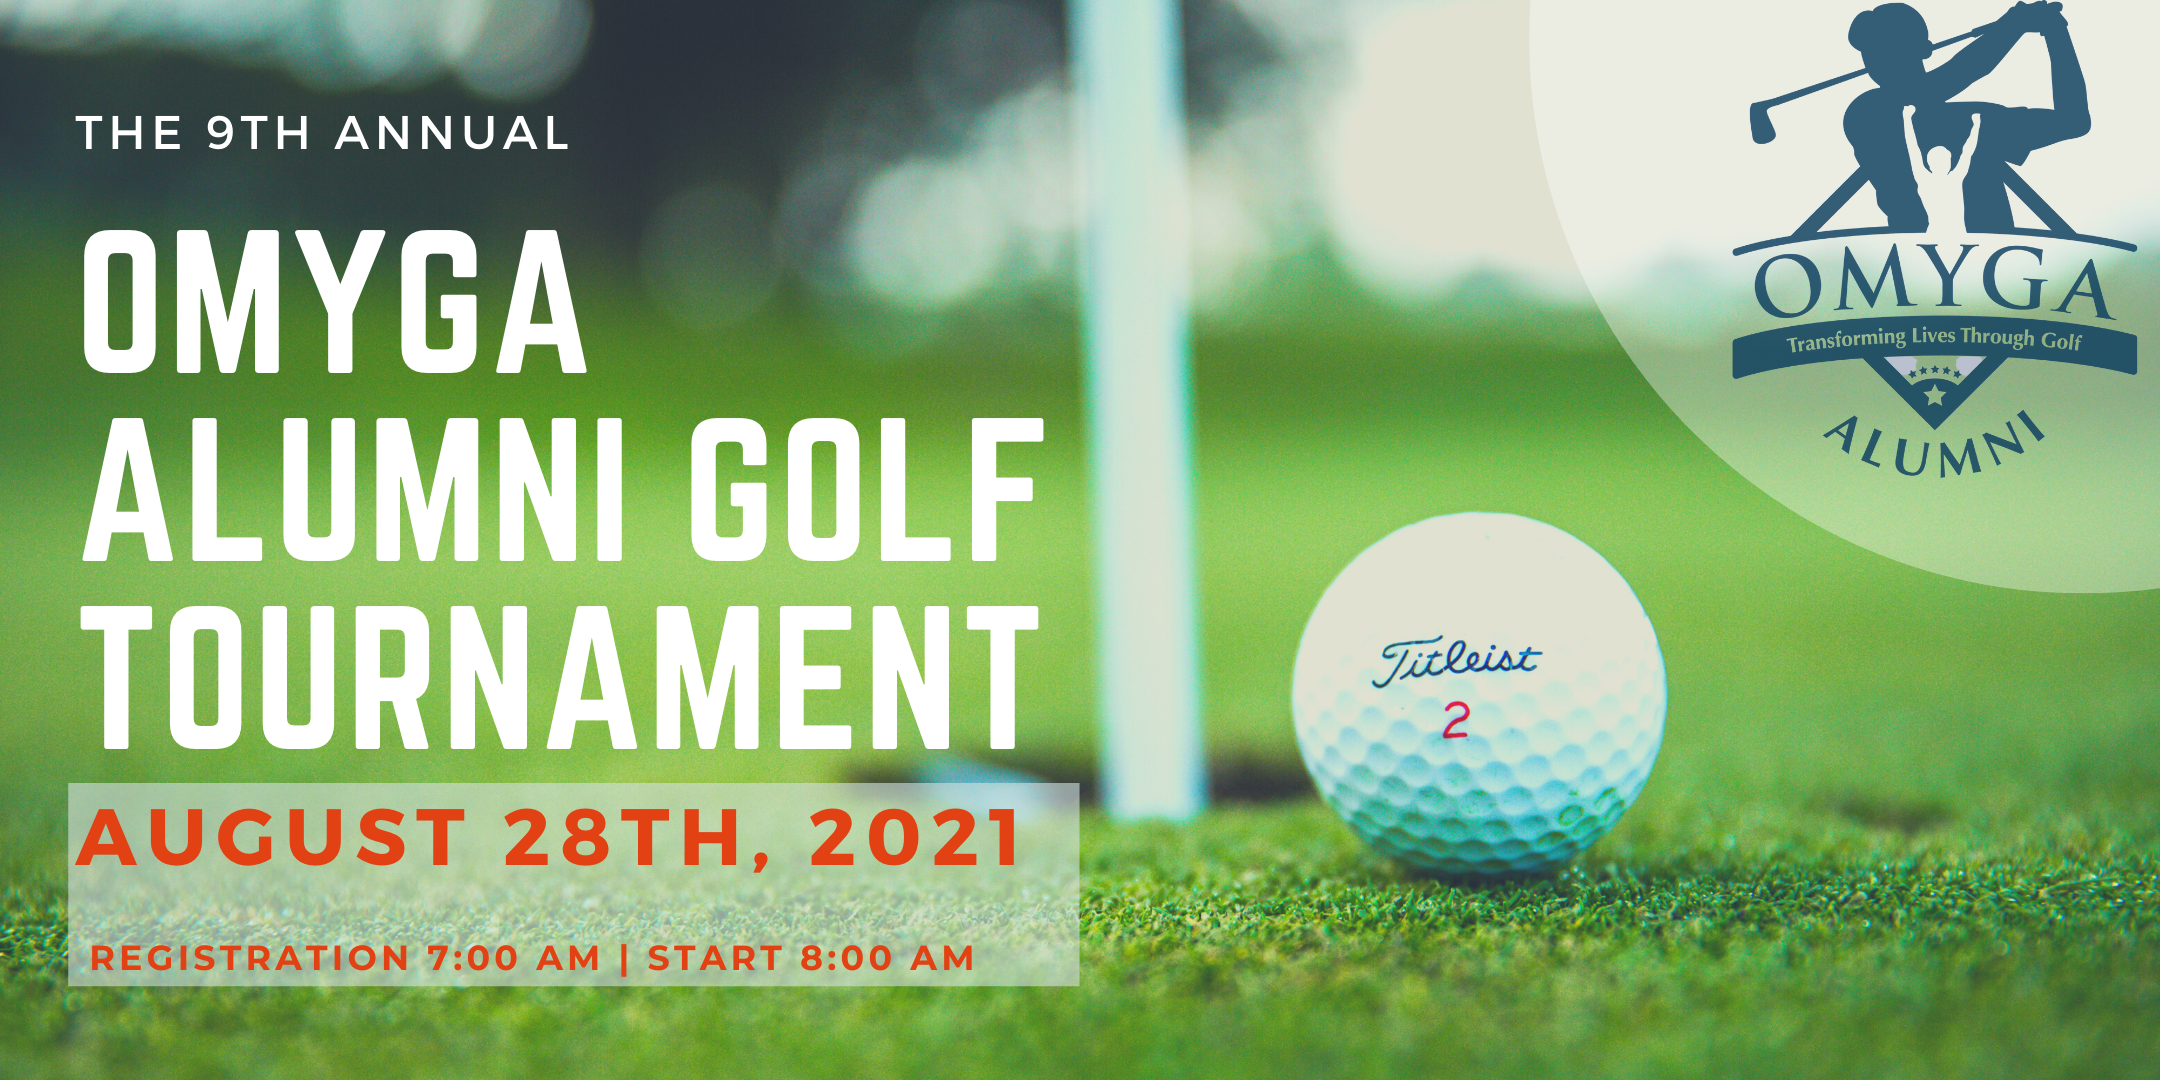 The 9th Annual OMYGA Alumni Golf Tournament